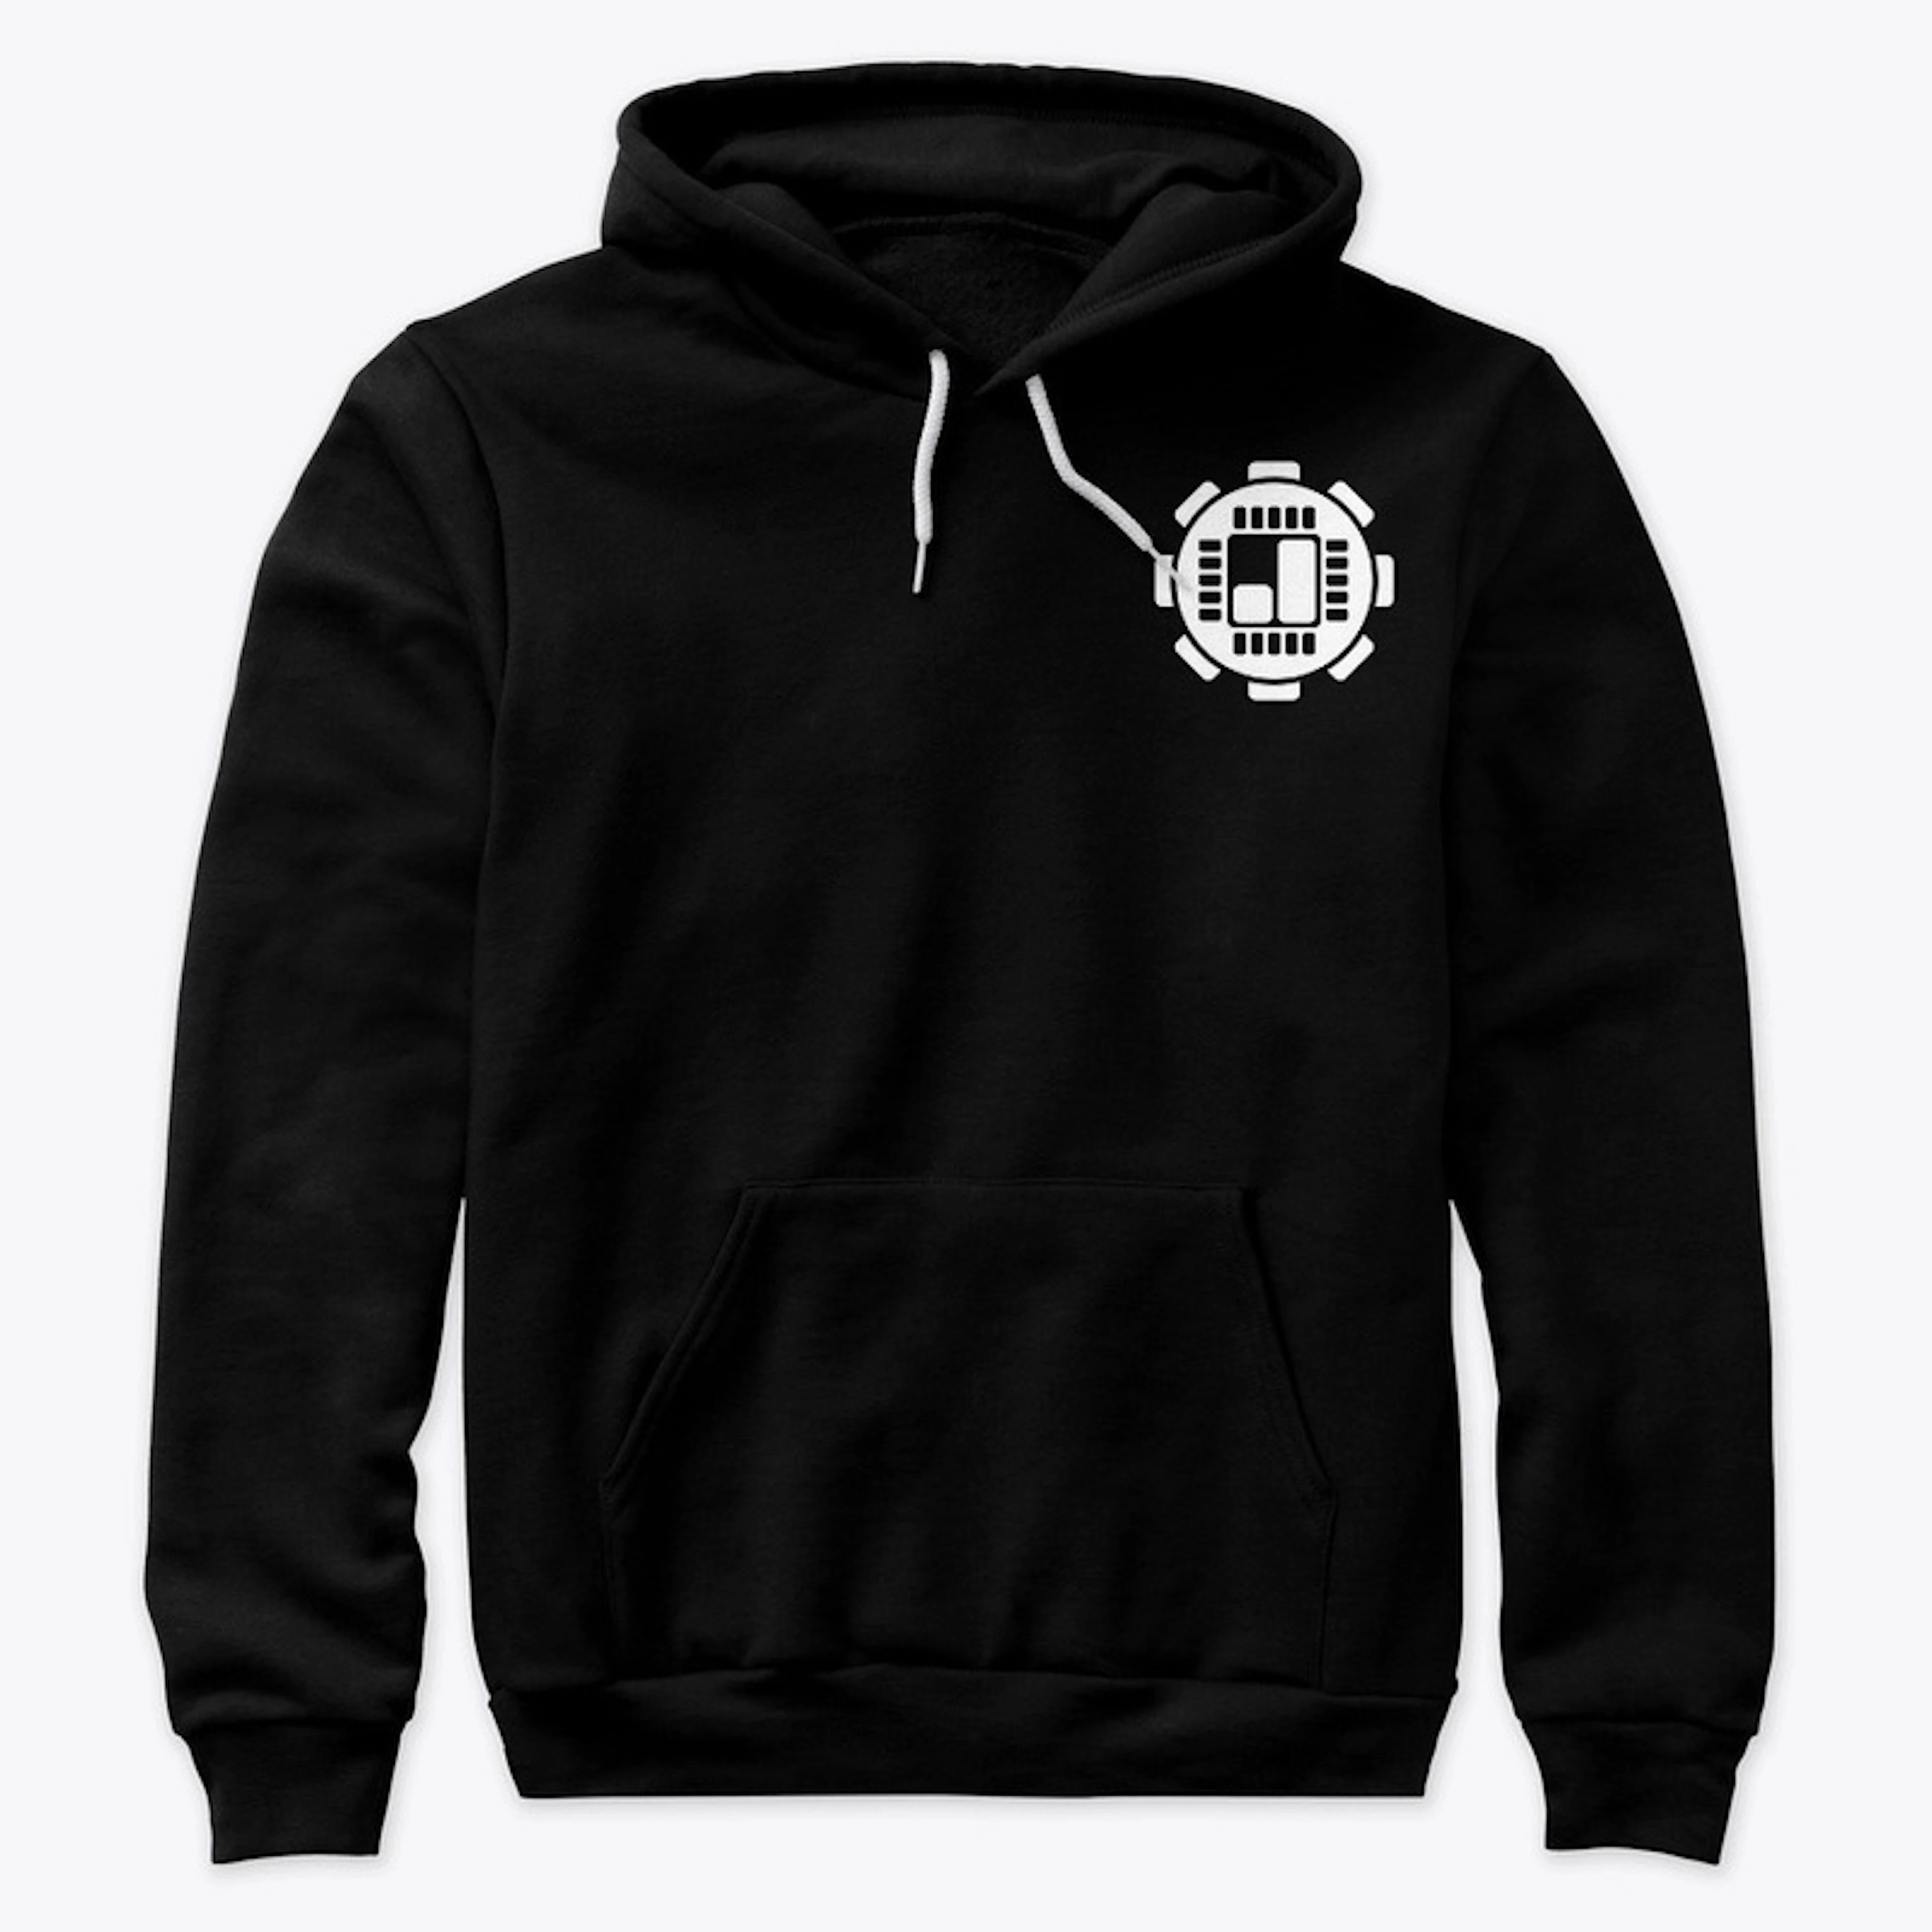 Jays hoodie design